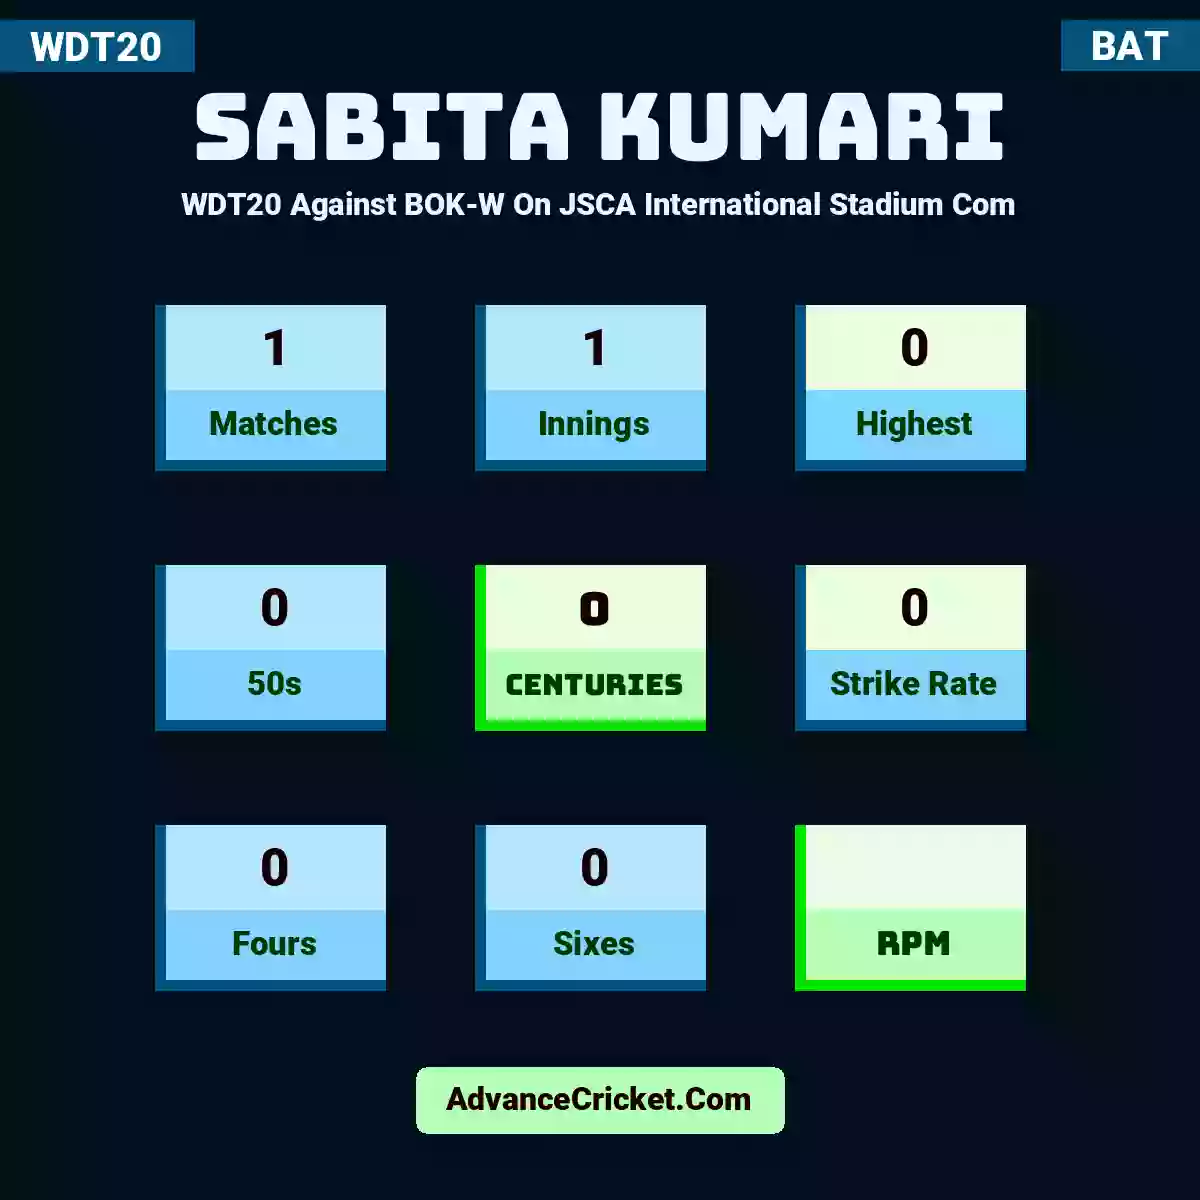 Sabita Kumari WDT20  Against BOK-W On JSCA International Stadium Com, Sabita Kumari played 1 matches, scored 0 runs as highest, 0 half-centuries, and 0 centuries, with a strike rate of 0. S.Kumari hit 0 fours and 0 sixes.